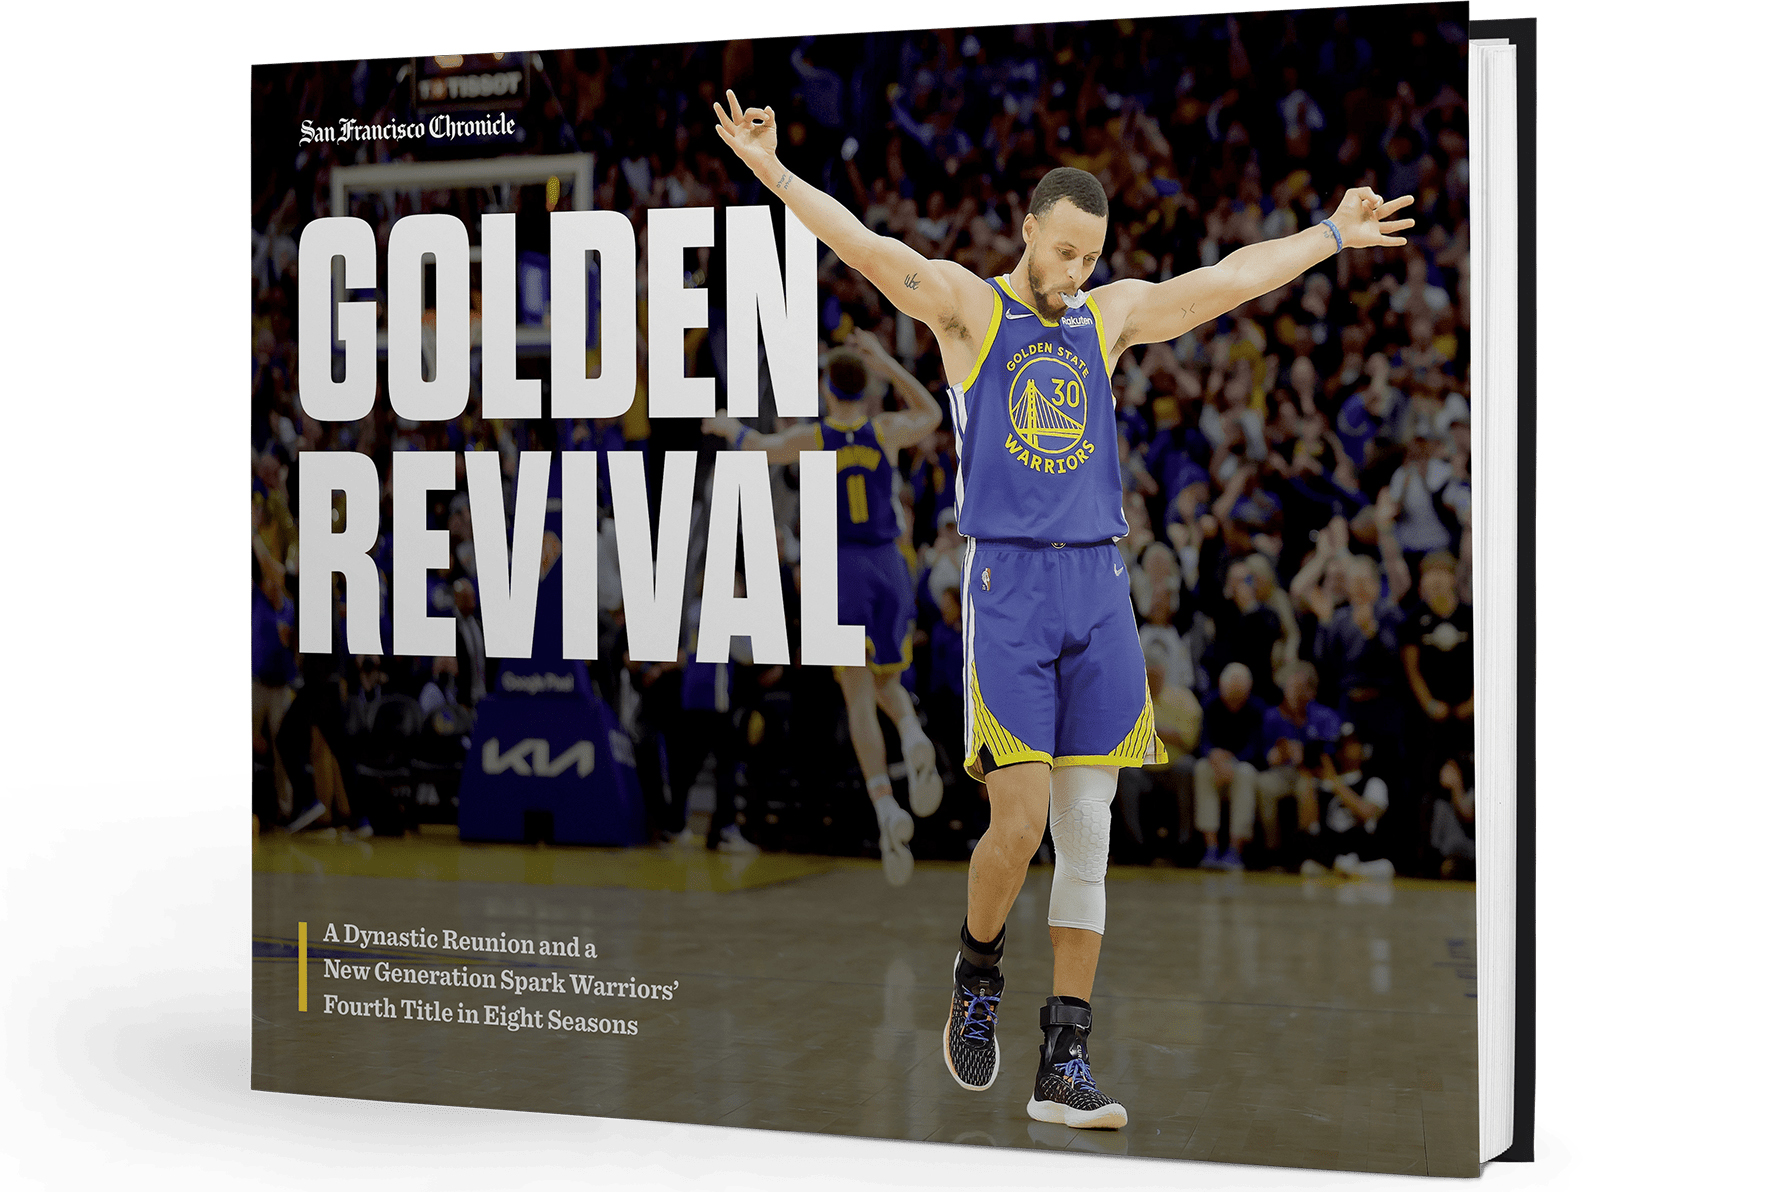 San Francisco Chronicle book 'Golden Revival' celebrates Golden